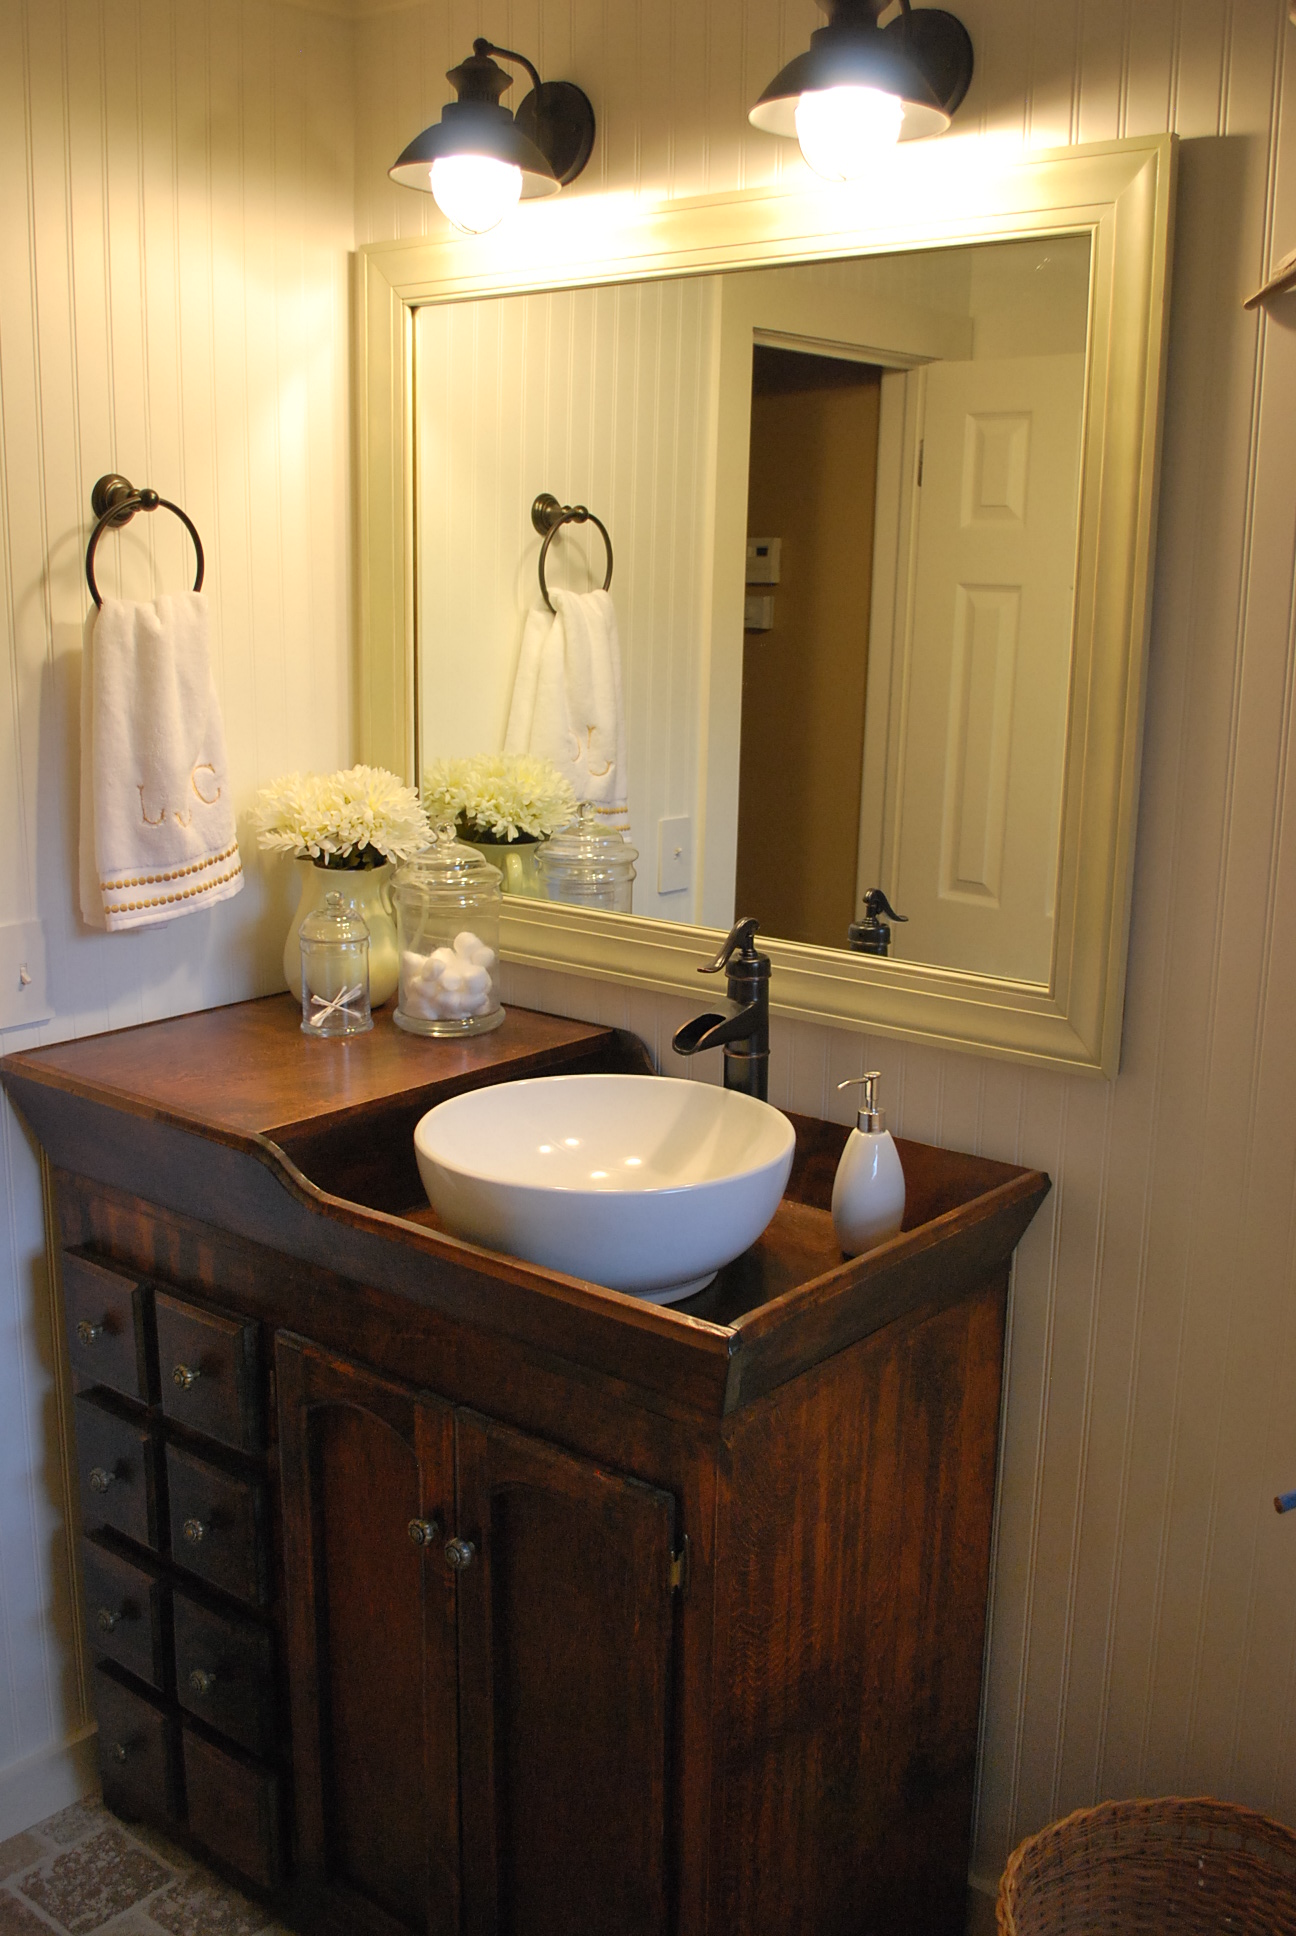 Stunning Bowl Bathroom Sinks Home Decorating Ideas